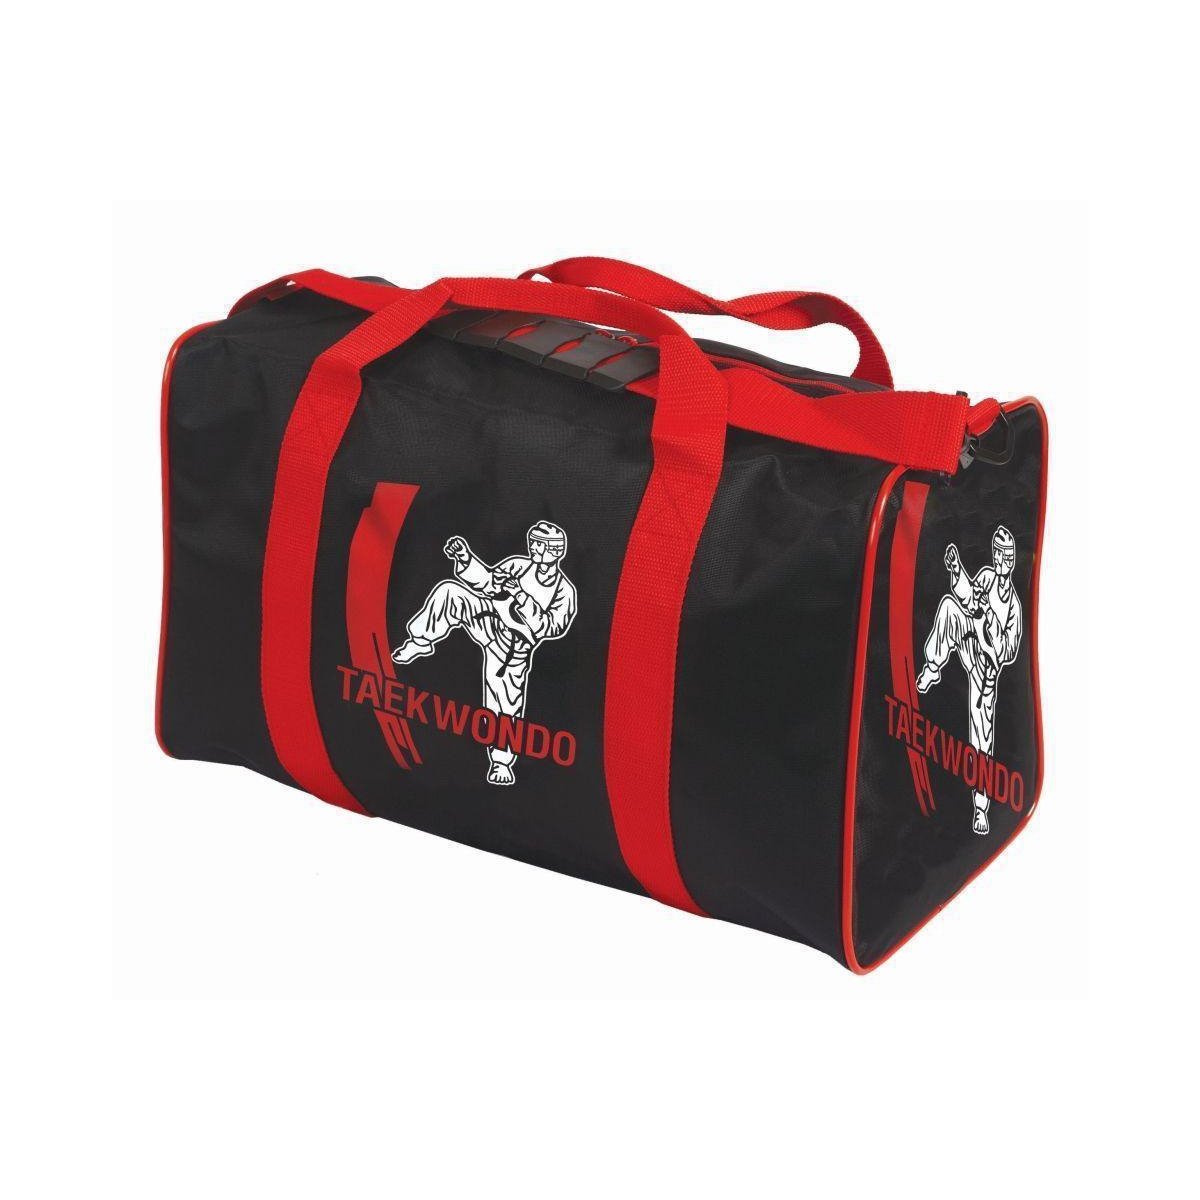 Cimac Martial Arts Holdall Equipment Bag